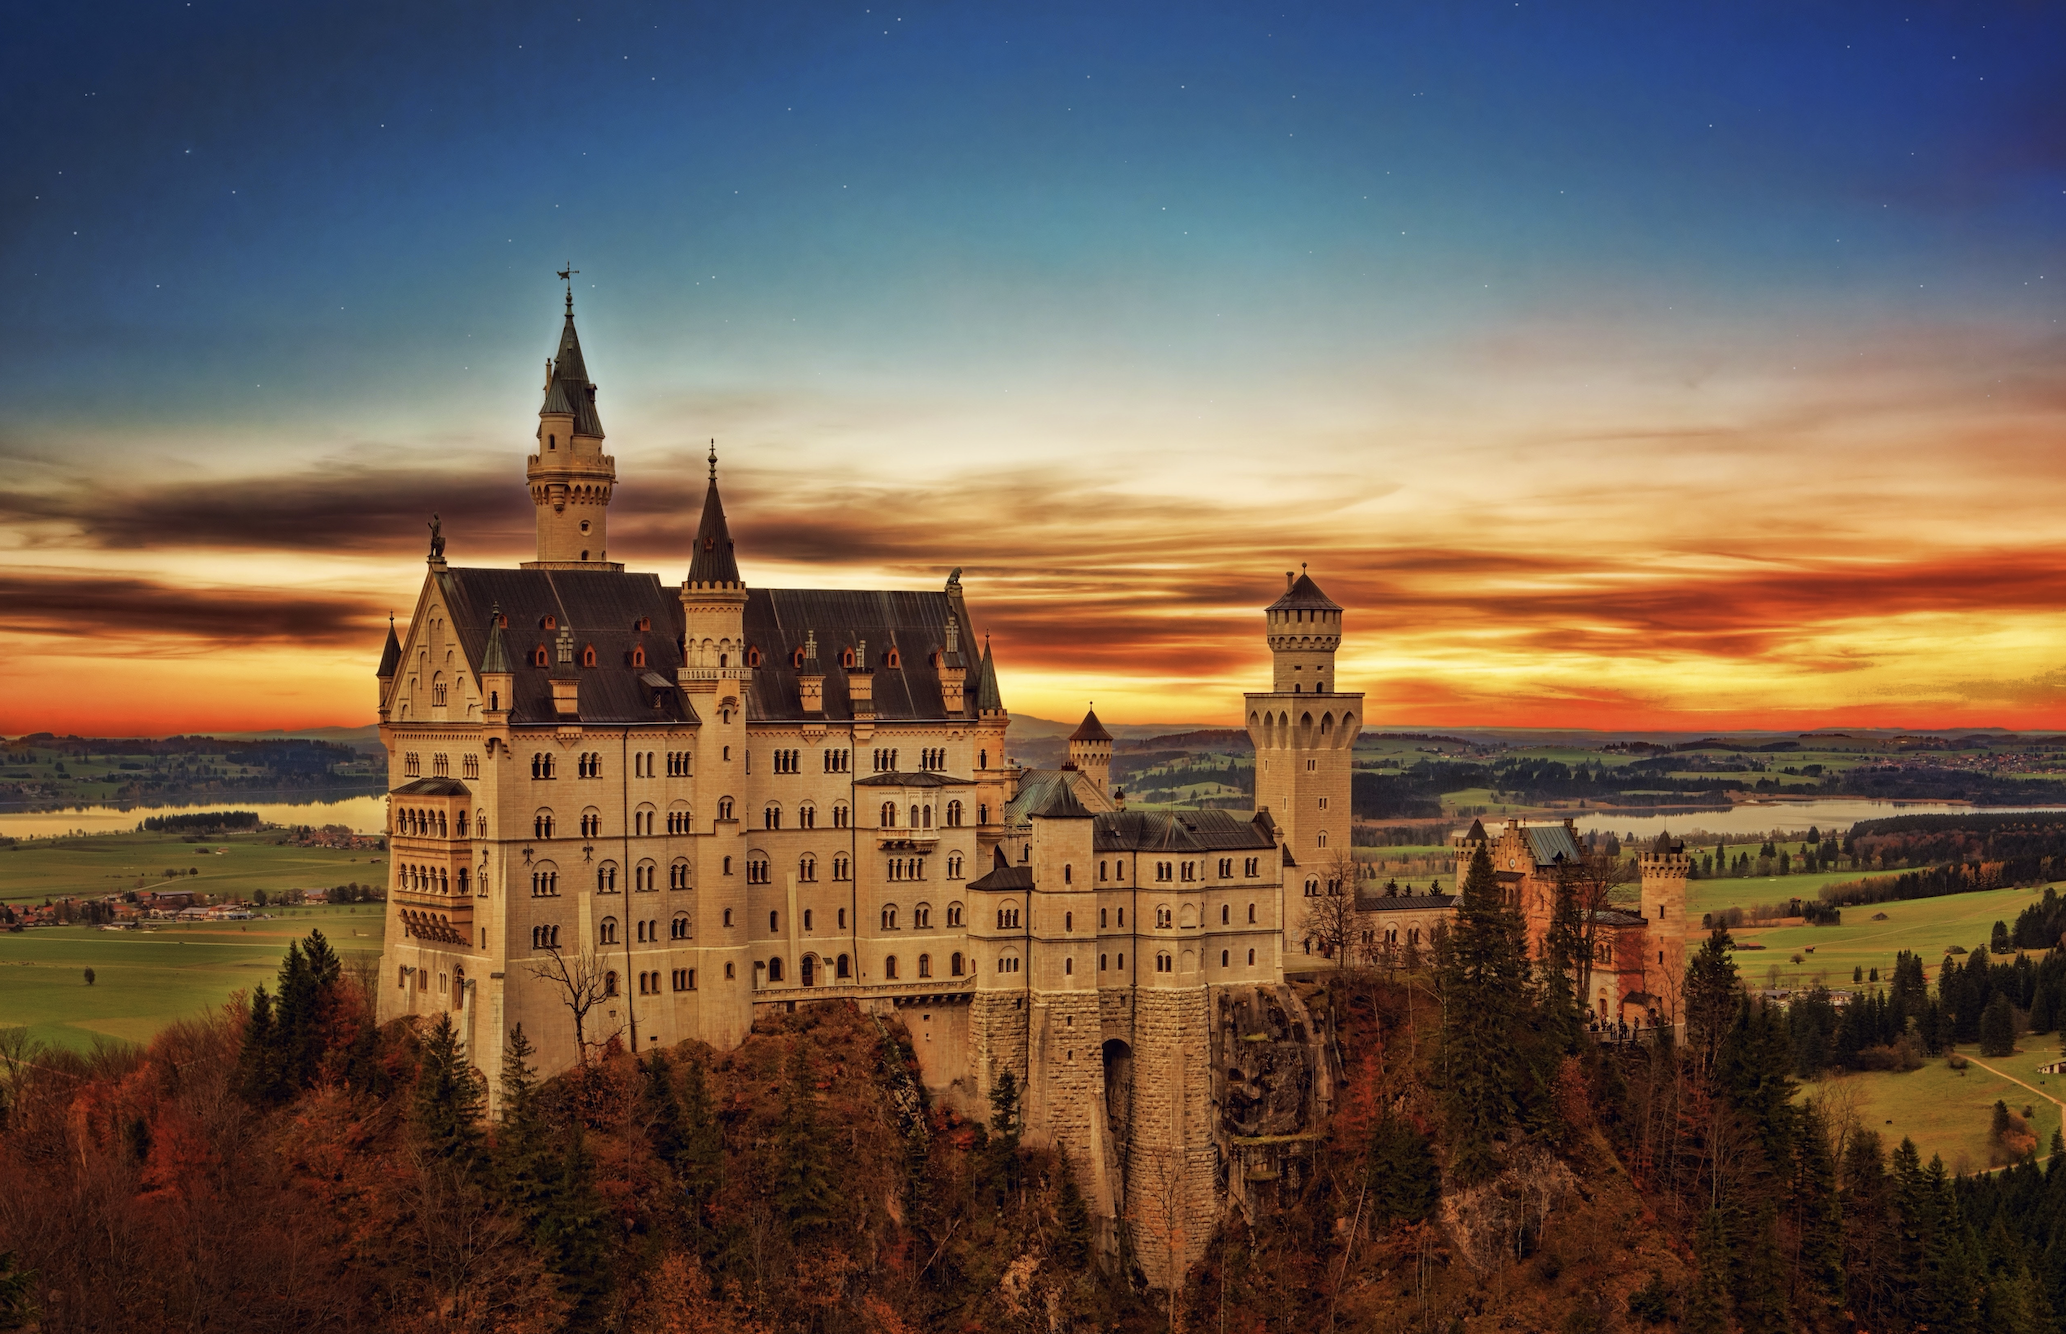 Pexels image credit. Image of disney castle in Germany